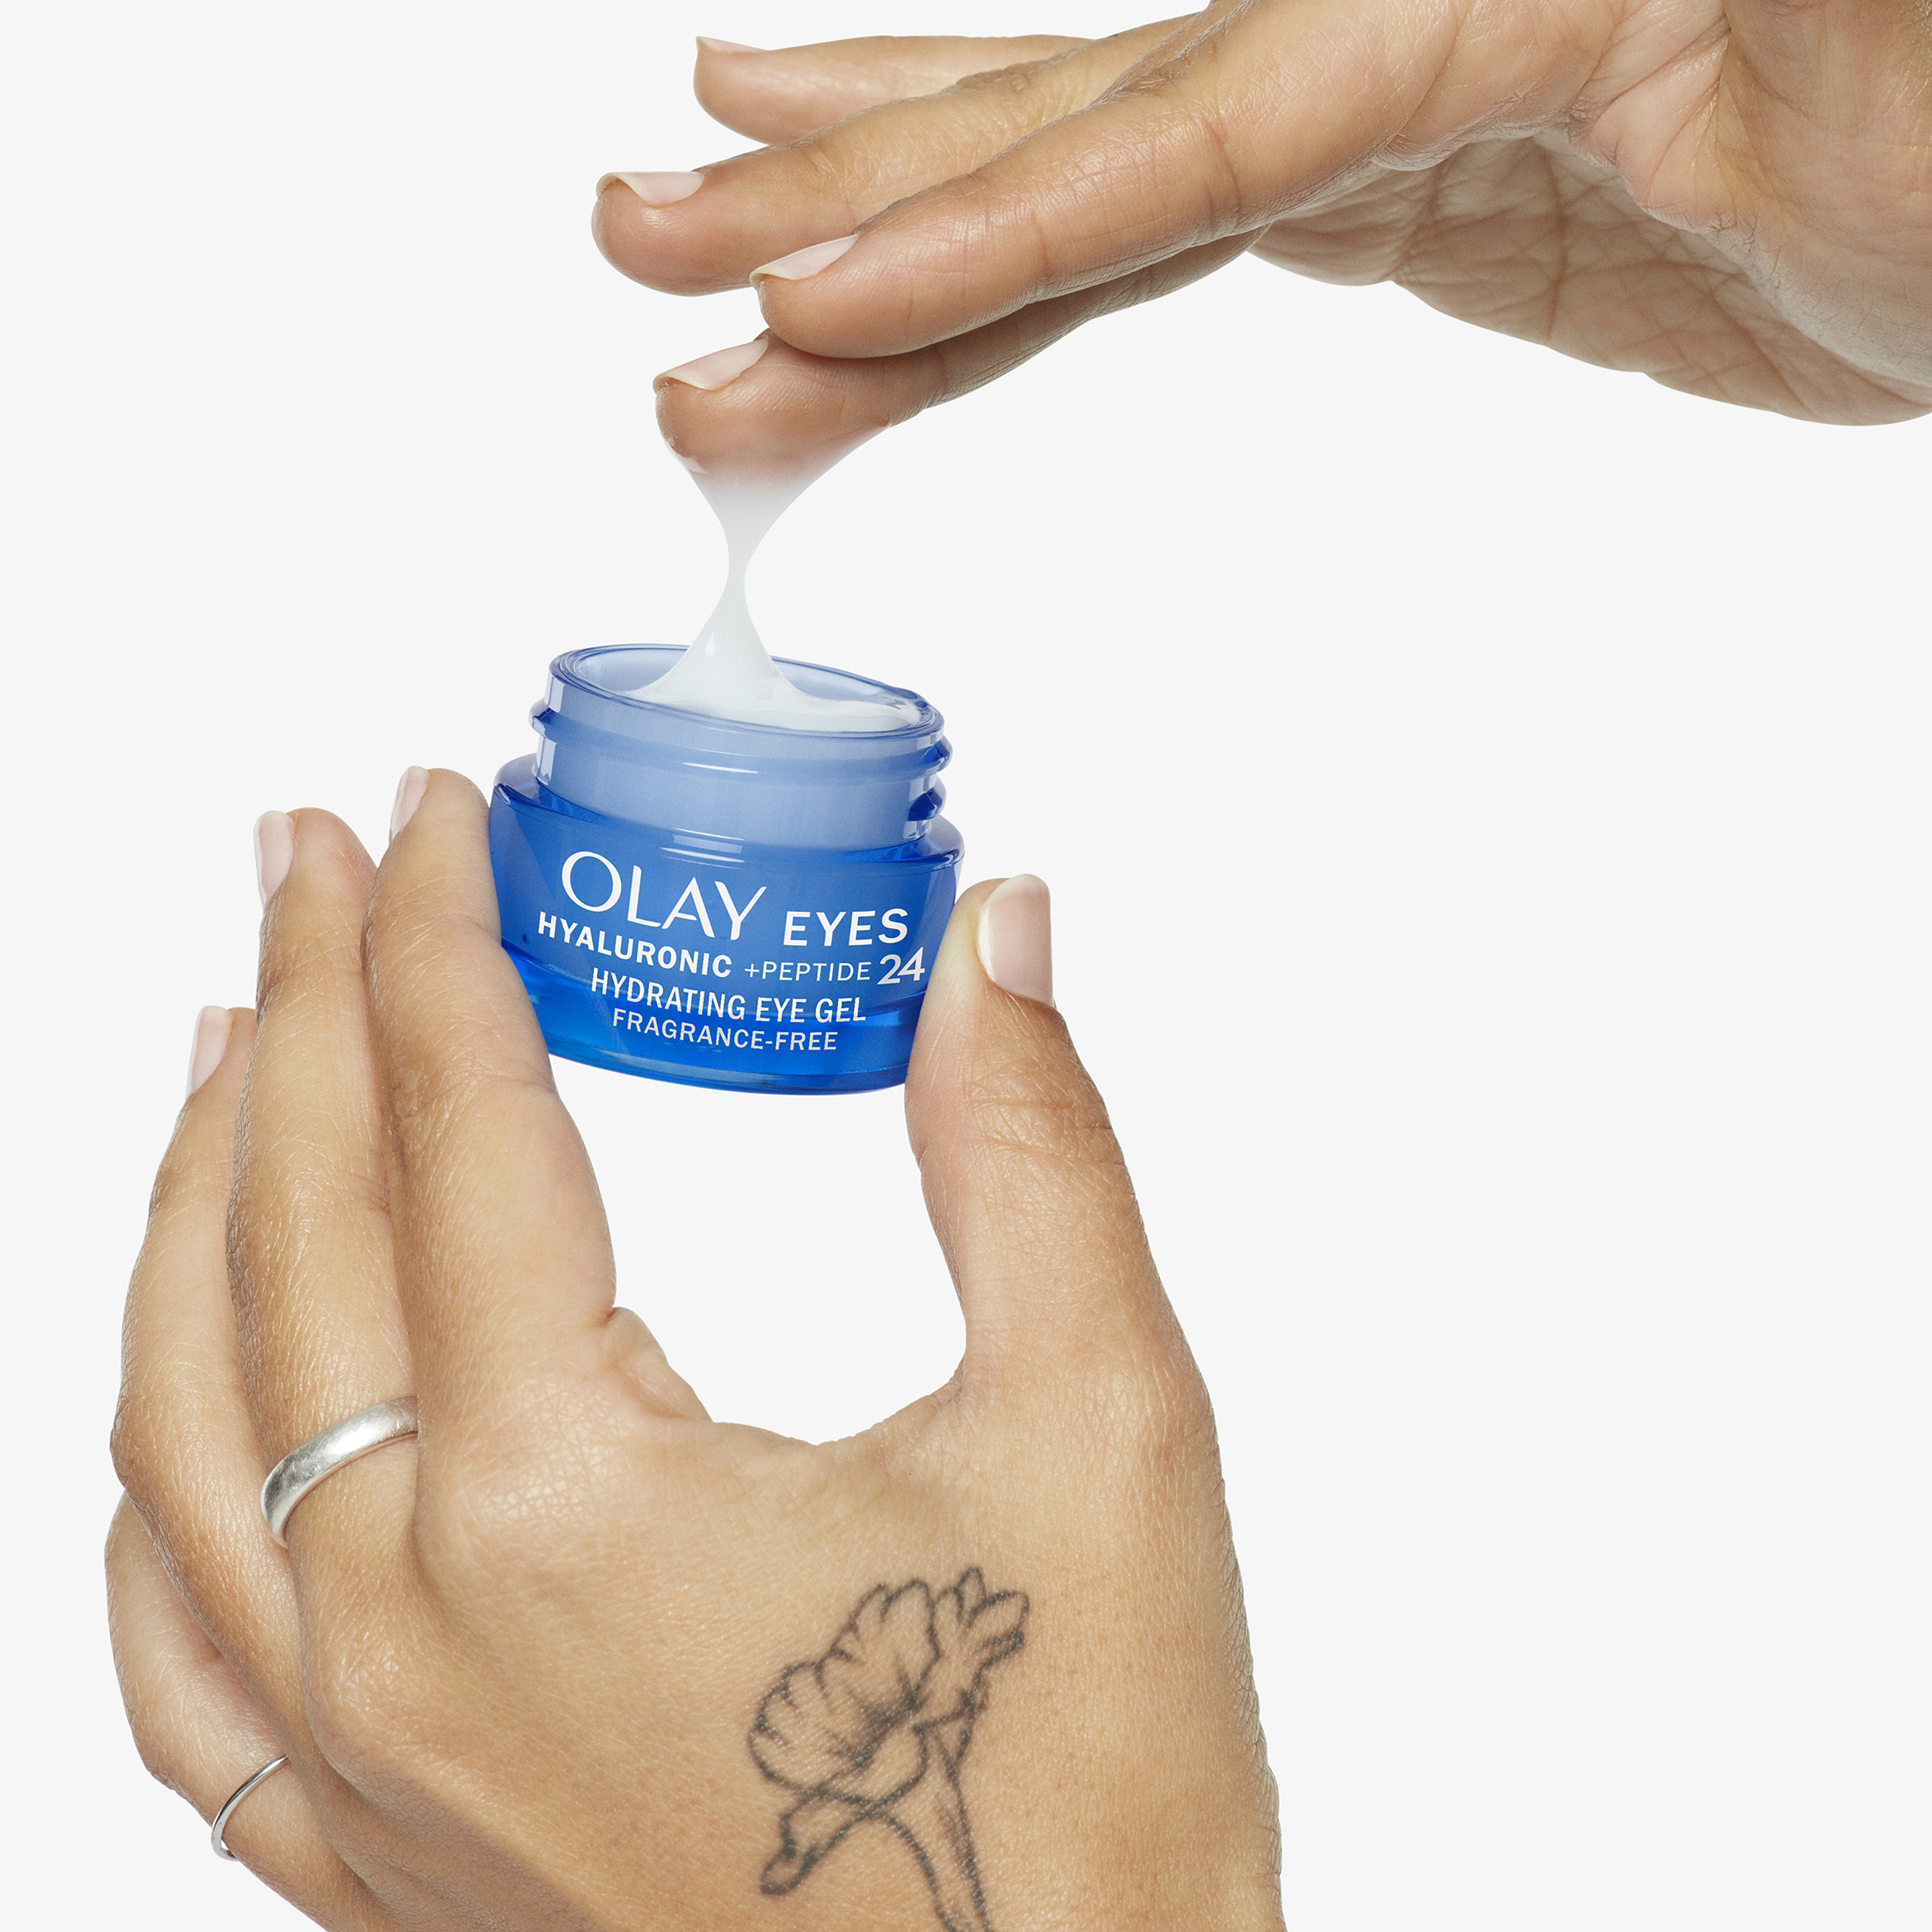 Olay Hyaluronic + Peptide 24 Gel Eye Cream, Fragrance-Free